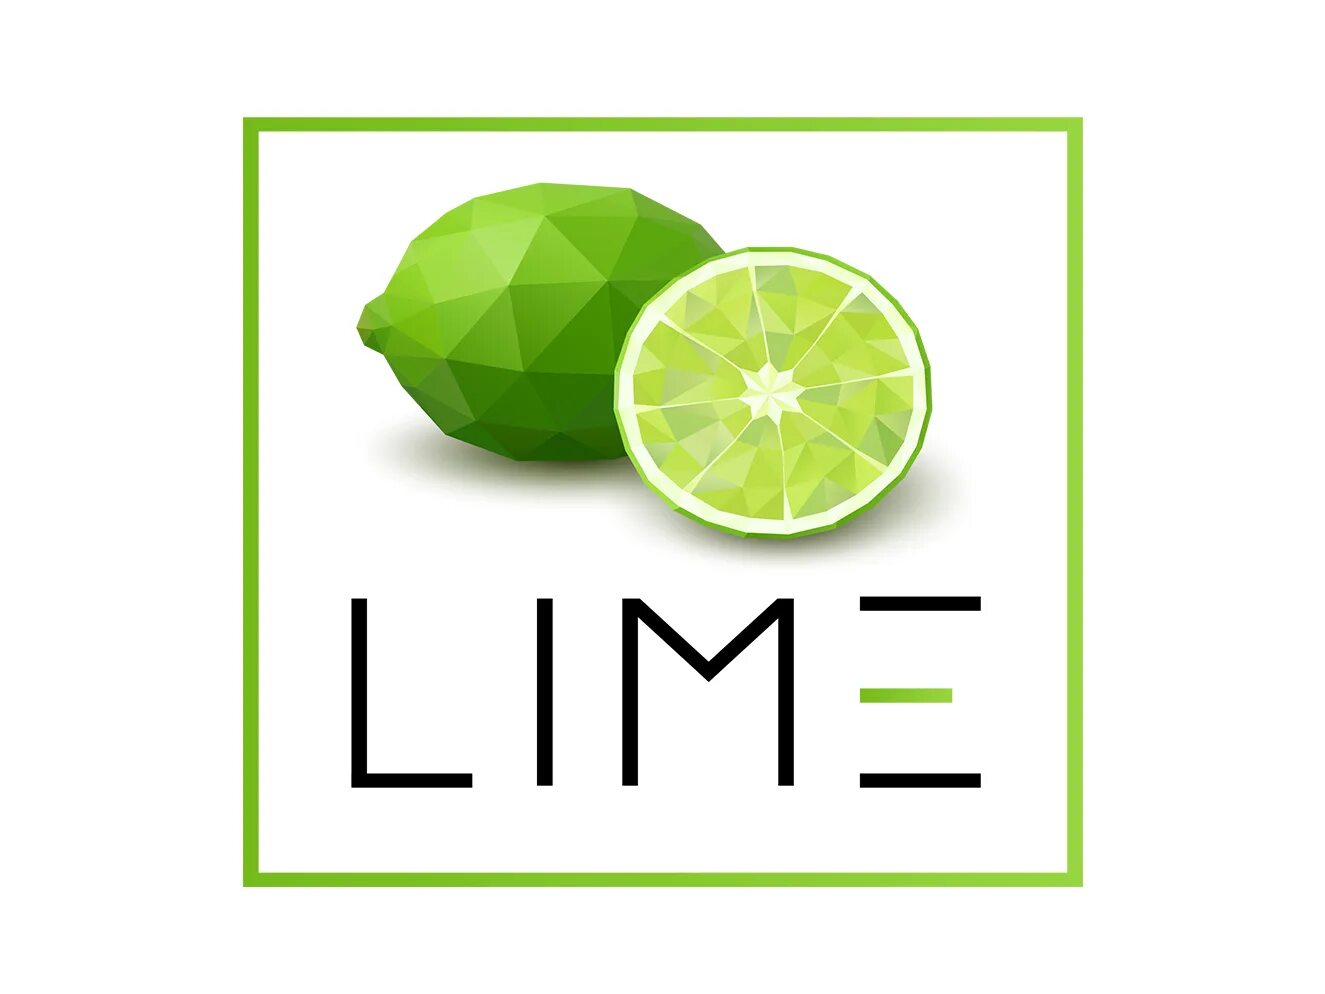 Lime kz. Лайм. Лайм логотип. Лайм иллюстрация. Lime эмблема магазин.